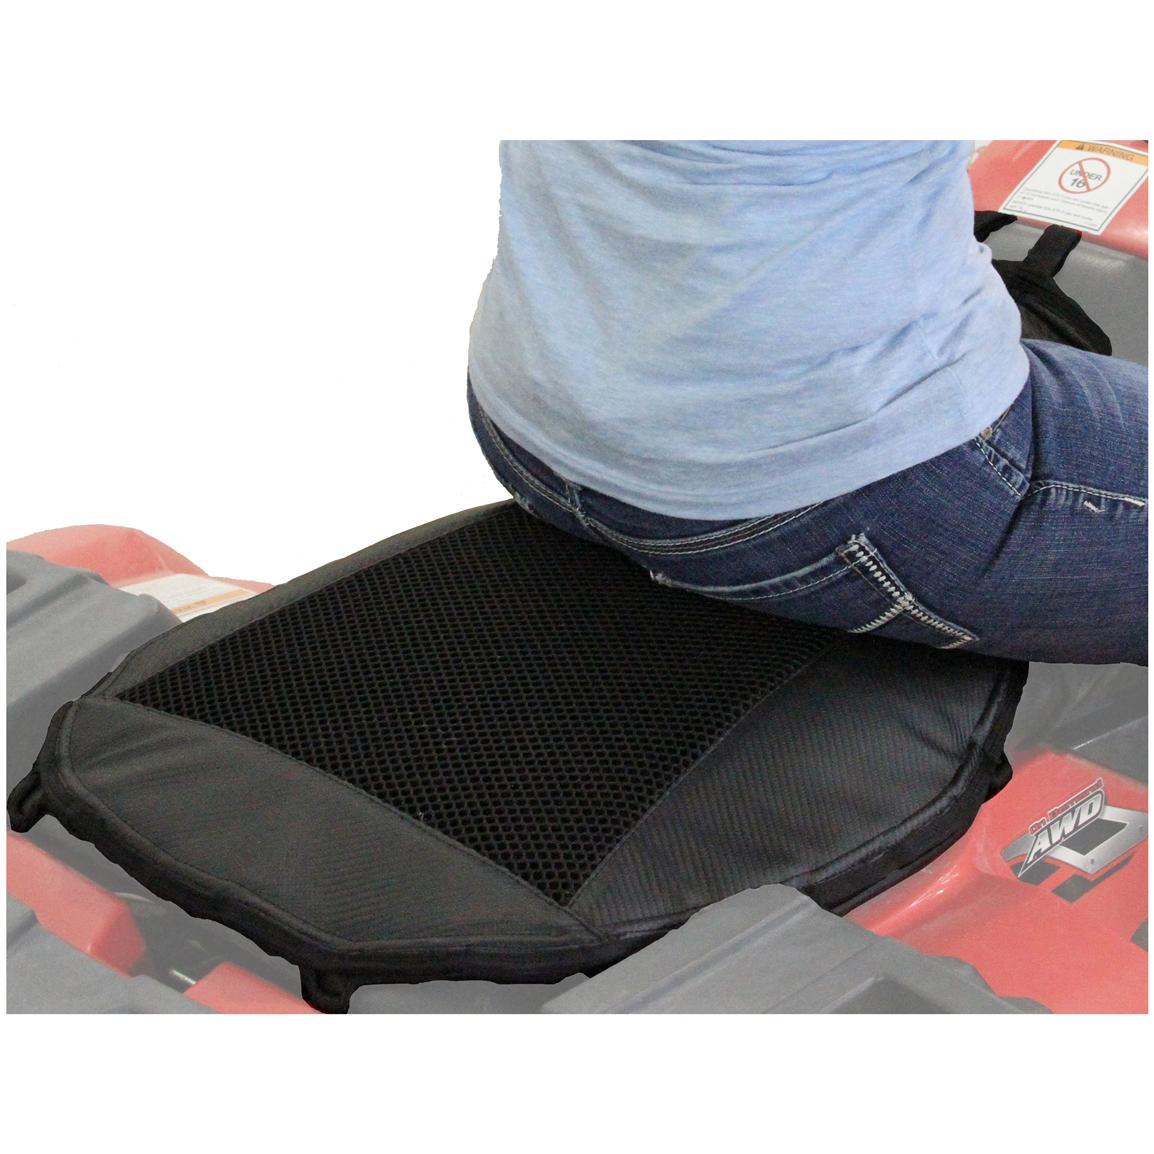 ATV-Tek ComoftTek Universal ATV Seat Protector with 3D Mesh